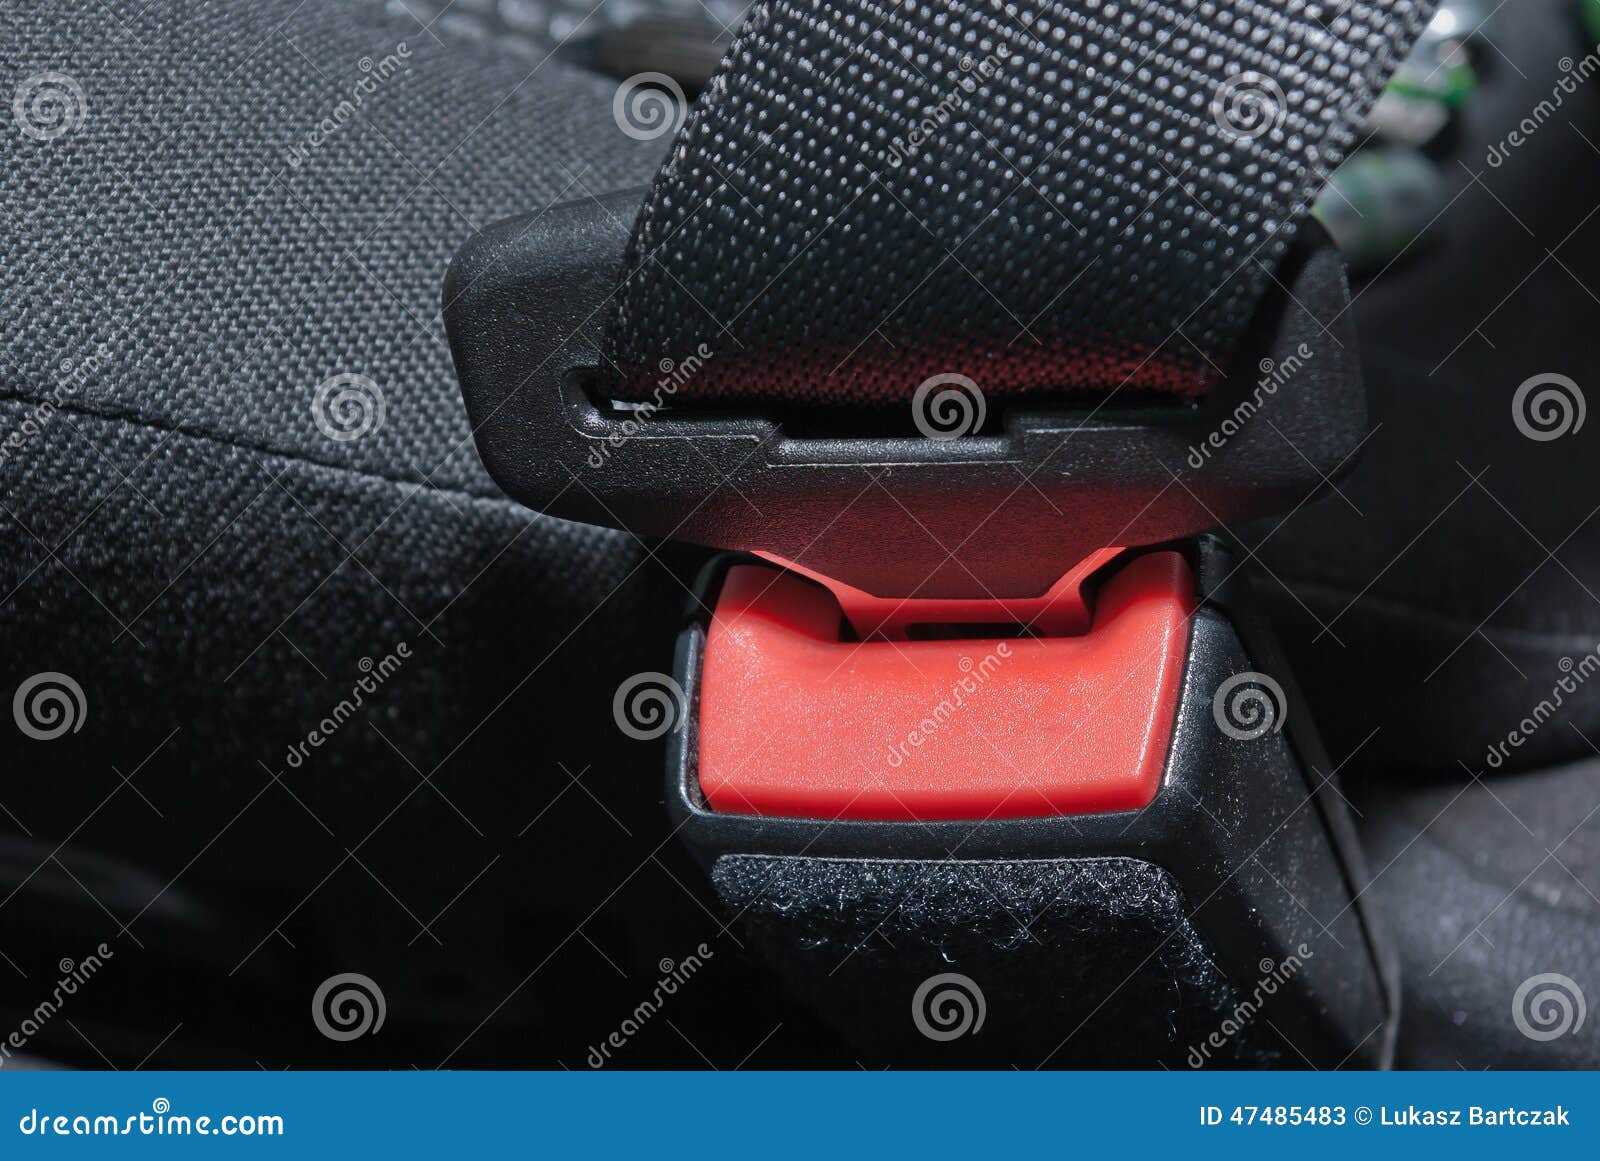 FAsten seat belt stock image. Image of transport, fasten - 47485483